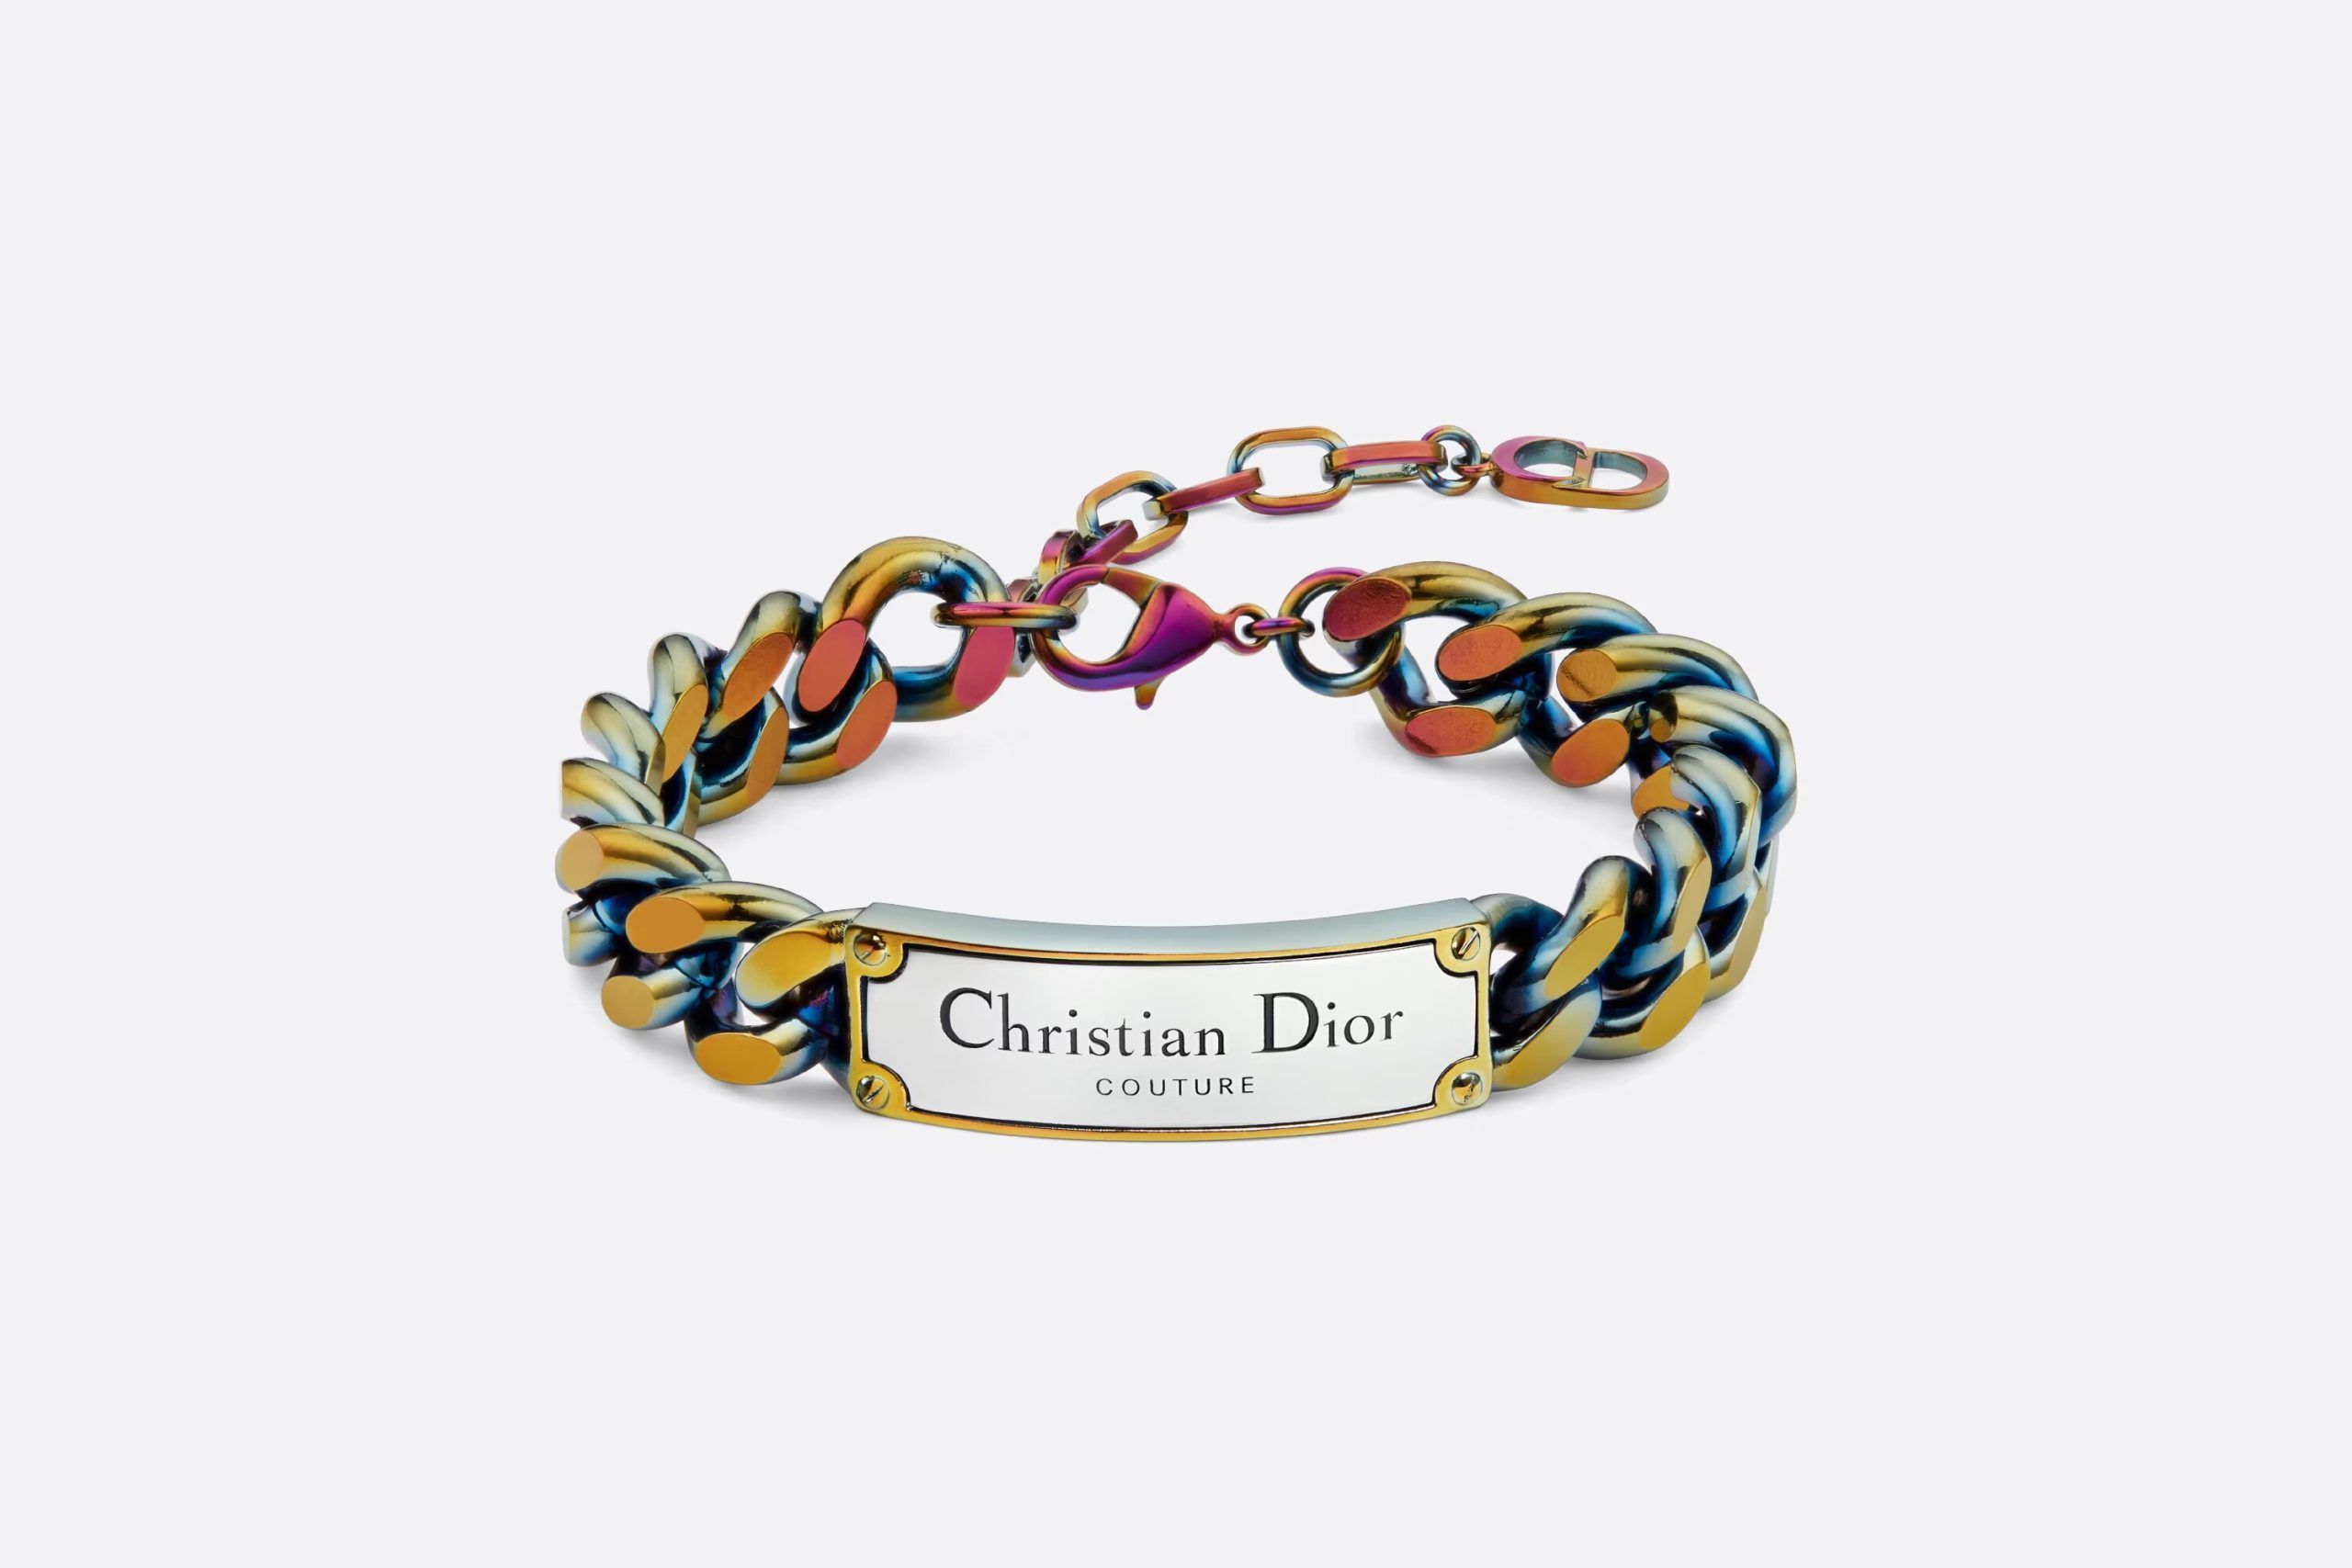 Christian Dior Bracelet Set Peach Blossom Pink and White Embroidery | DIOR